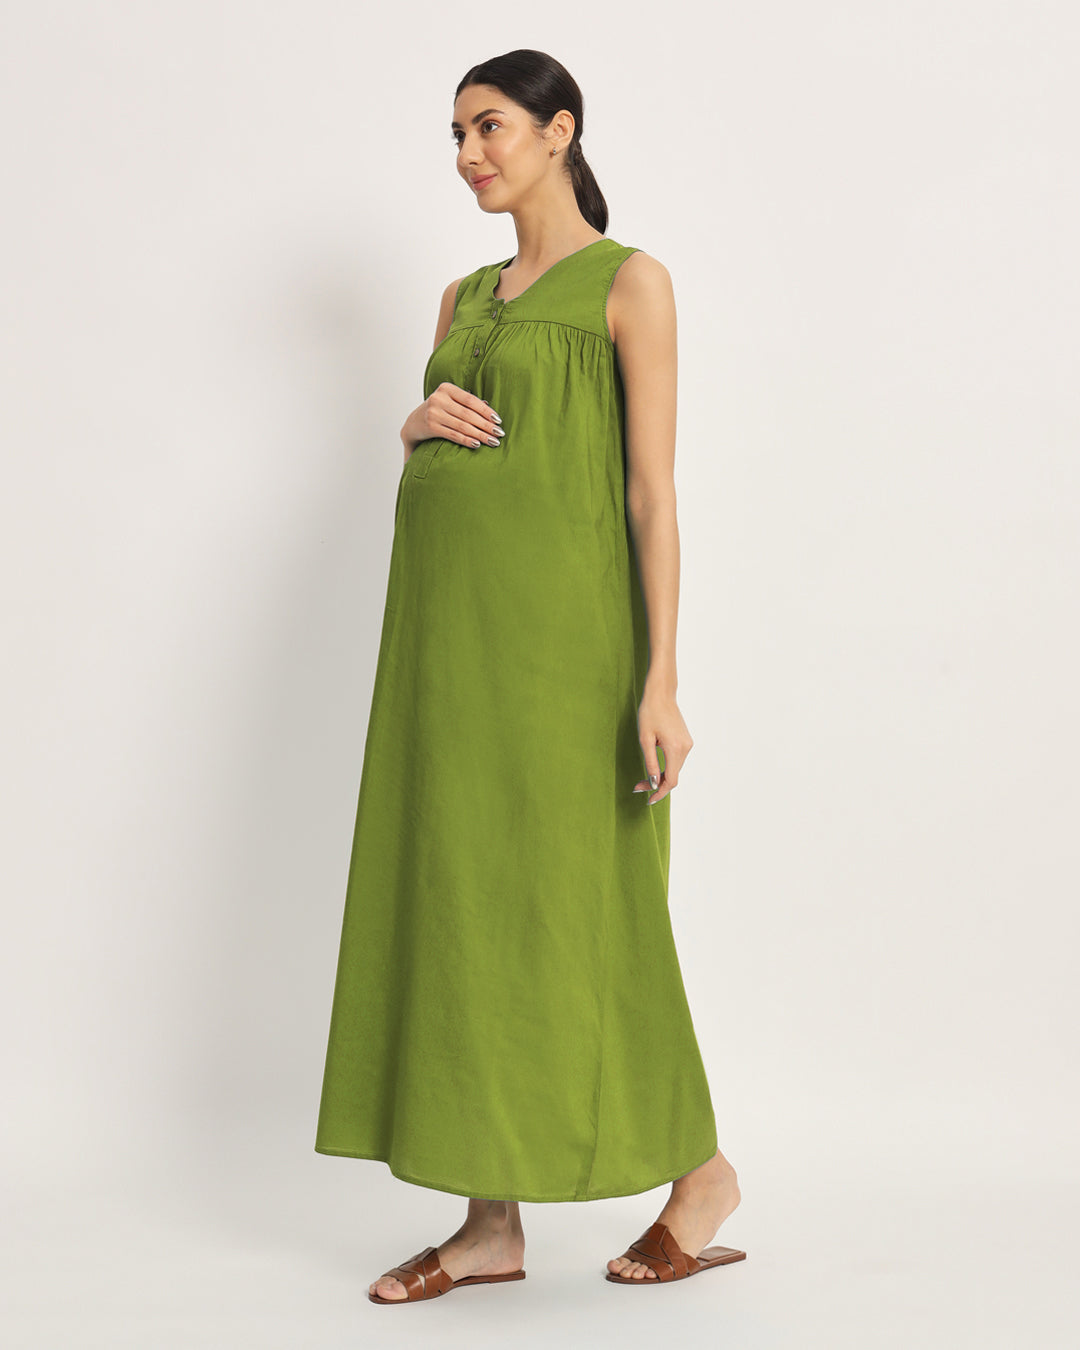 Combo: Black & Sage Green Mommylicious Maternity & Nursing Dress